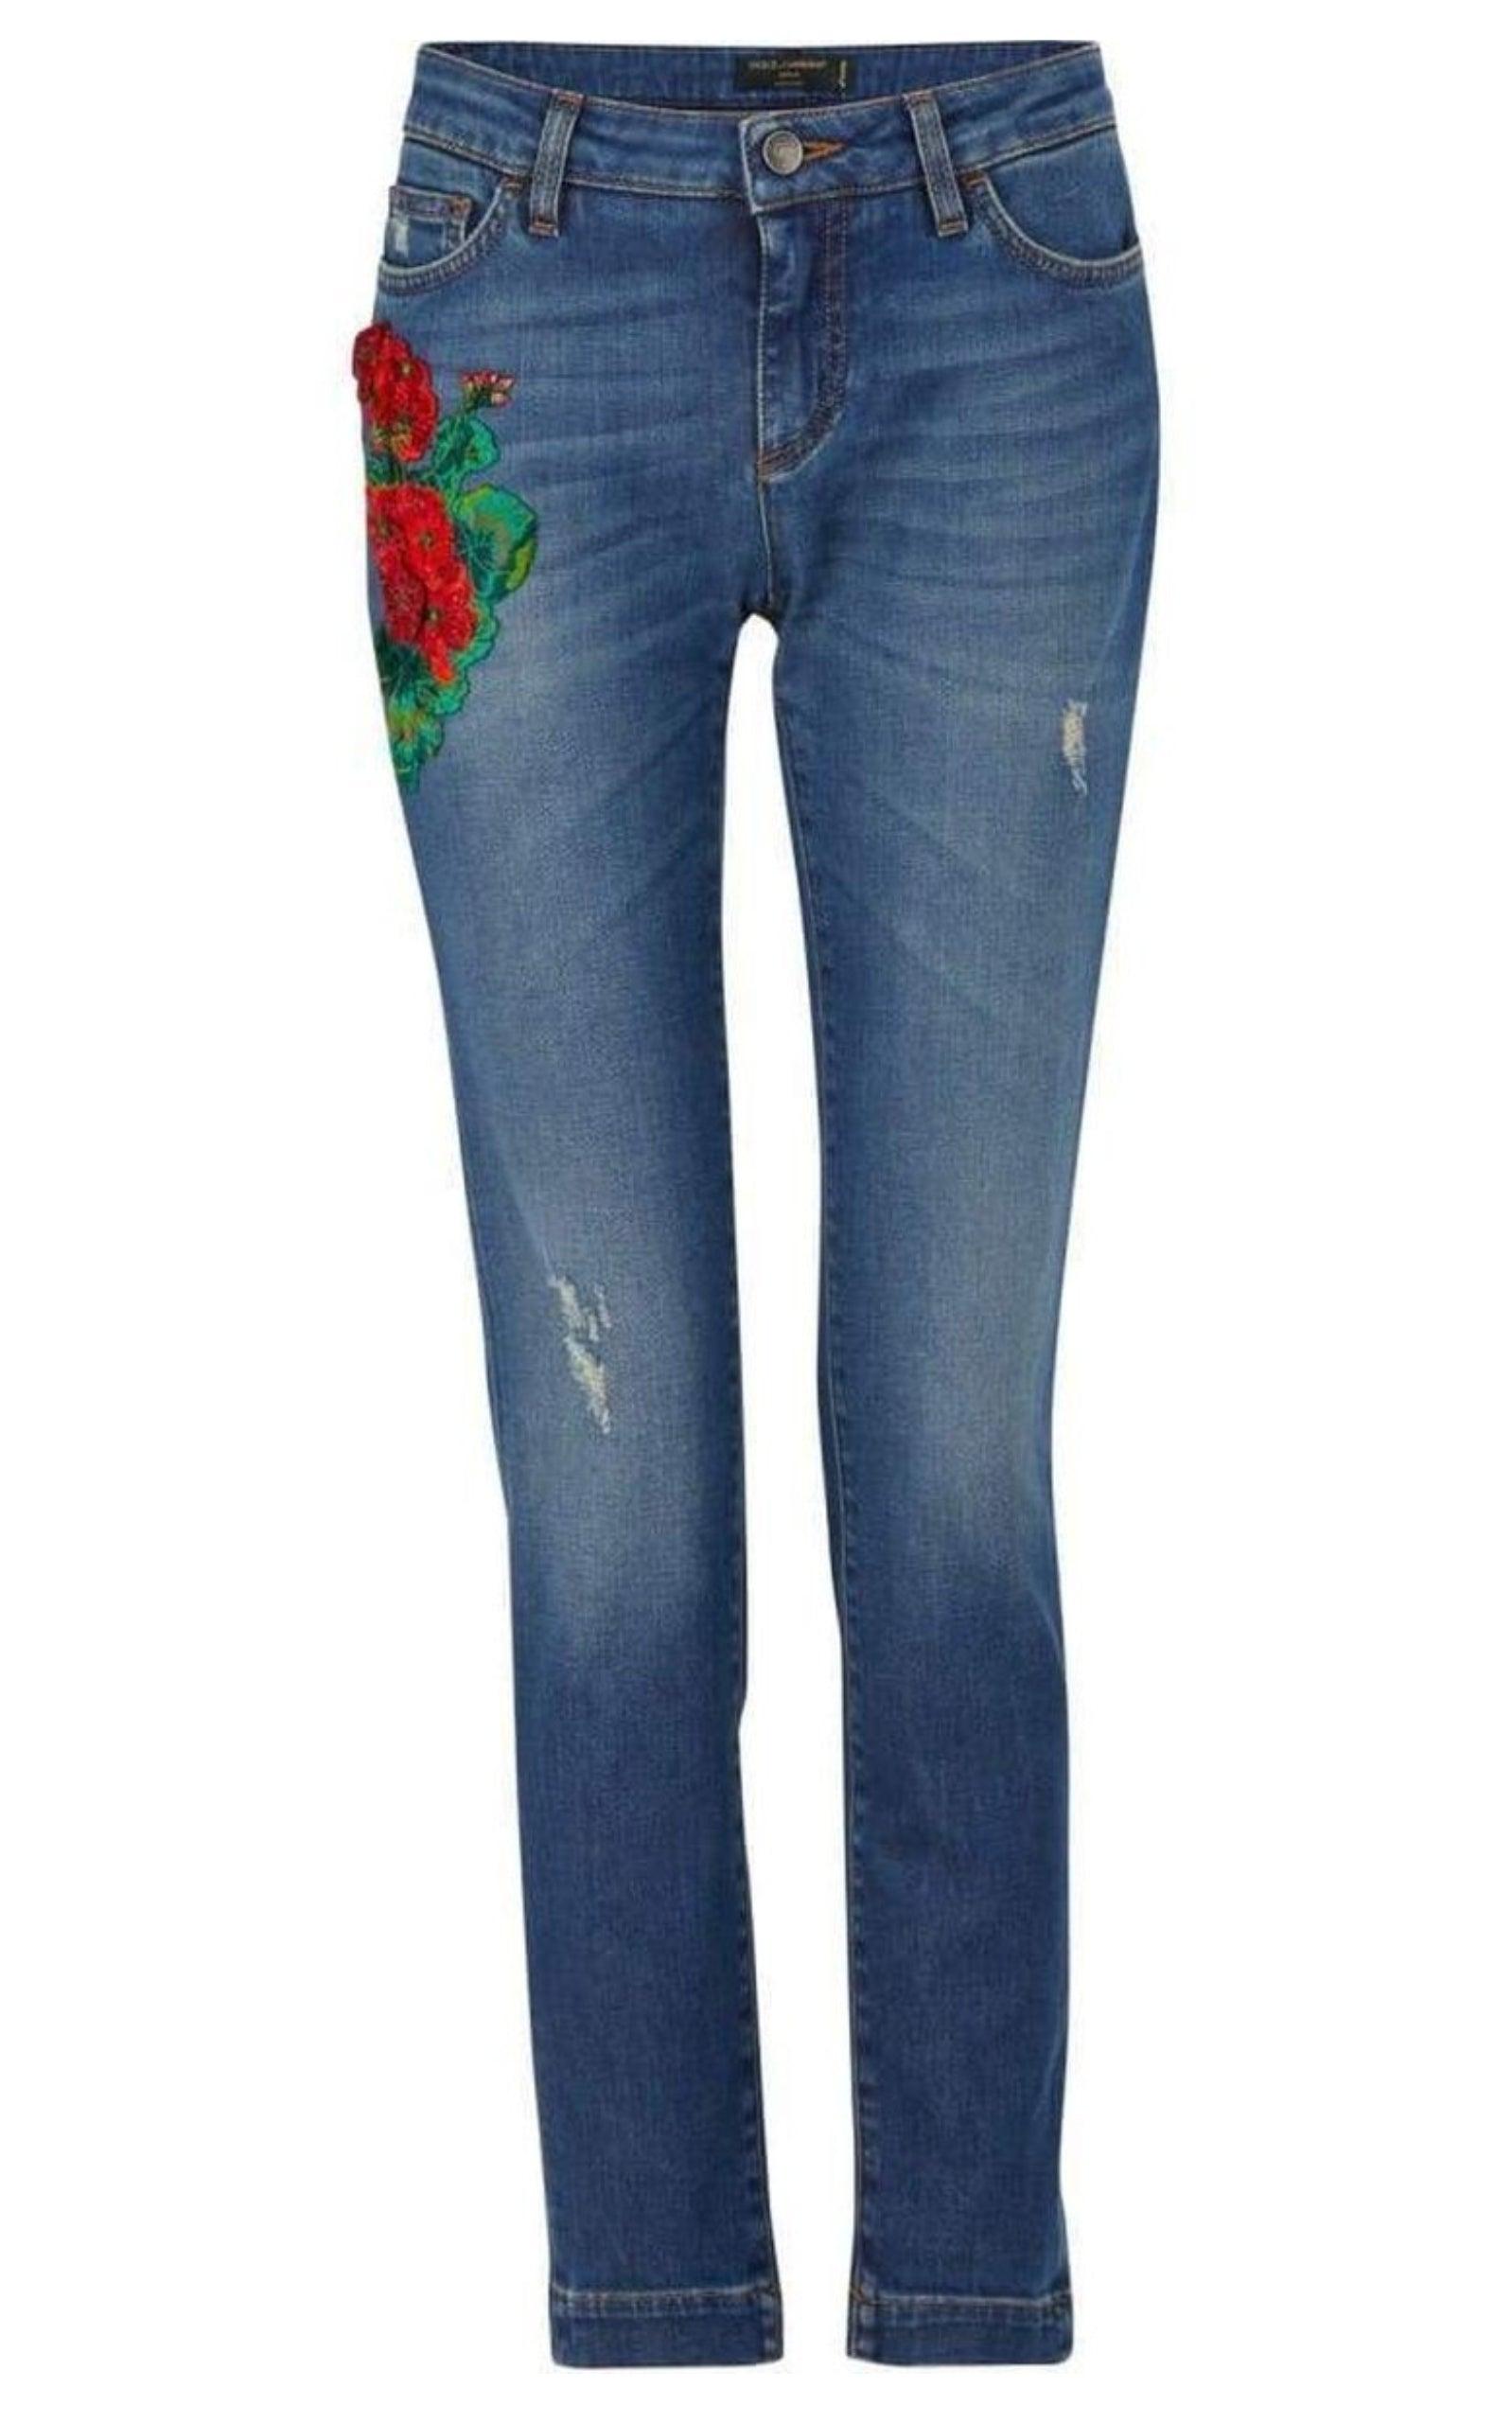 ¥ellowbucks【EV BRAVAD】embroidery skinny jeans